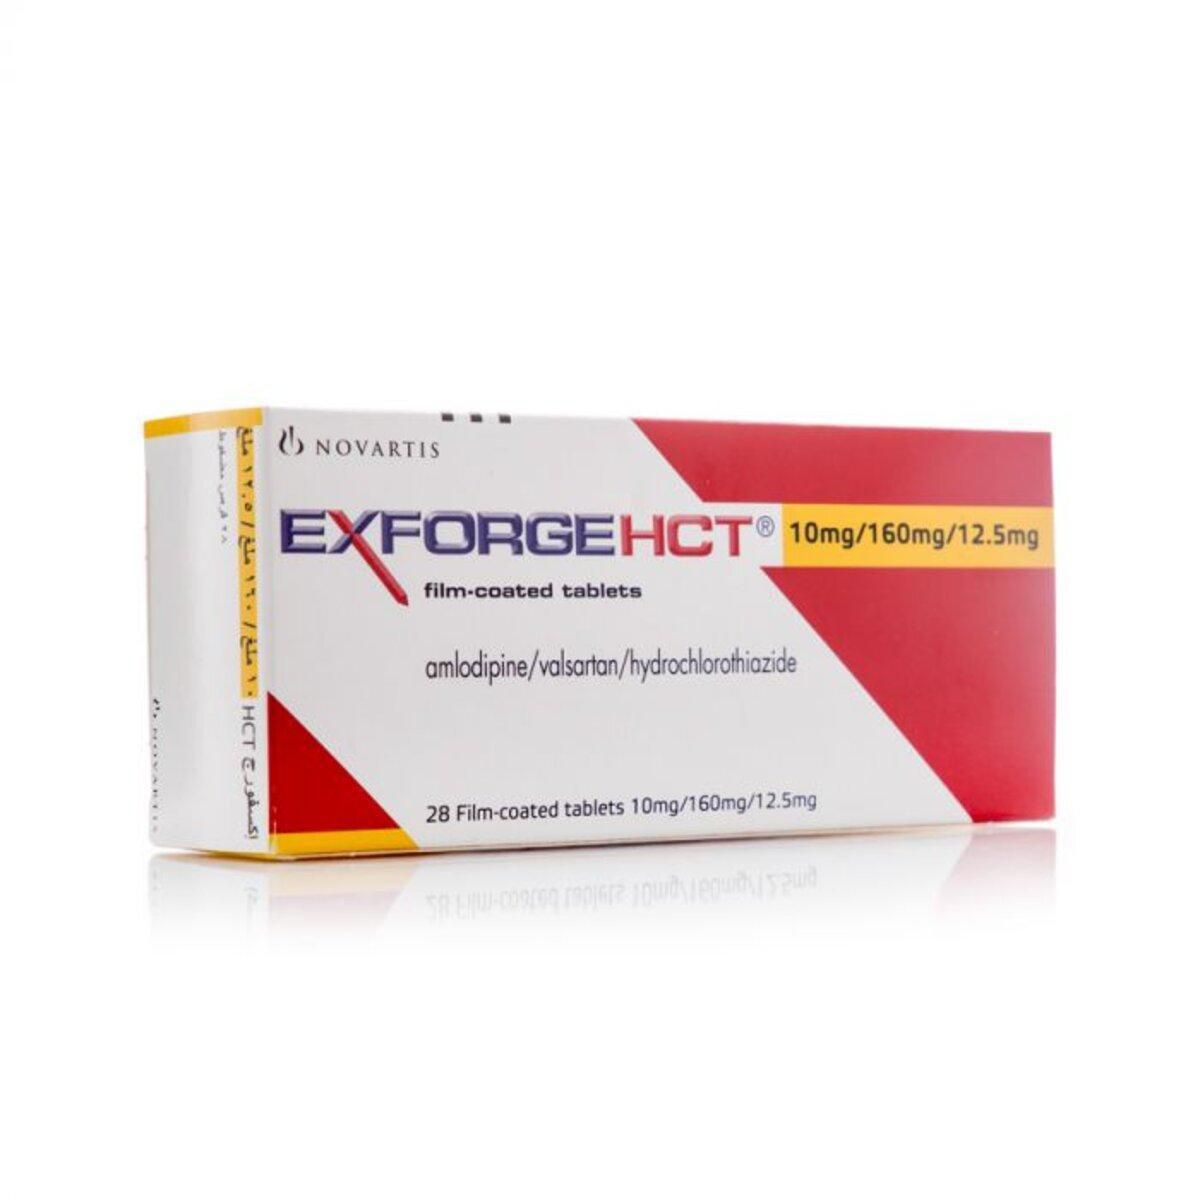 Exforge HCT 10mg/160mg/12.5mg Tablets, 28 Tablets